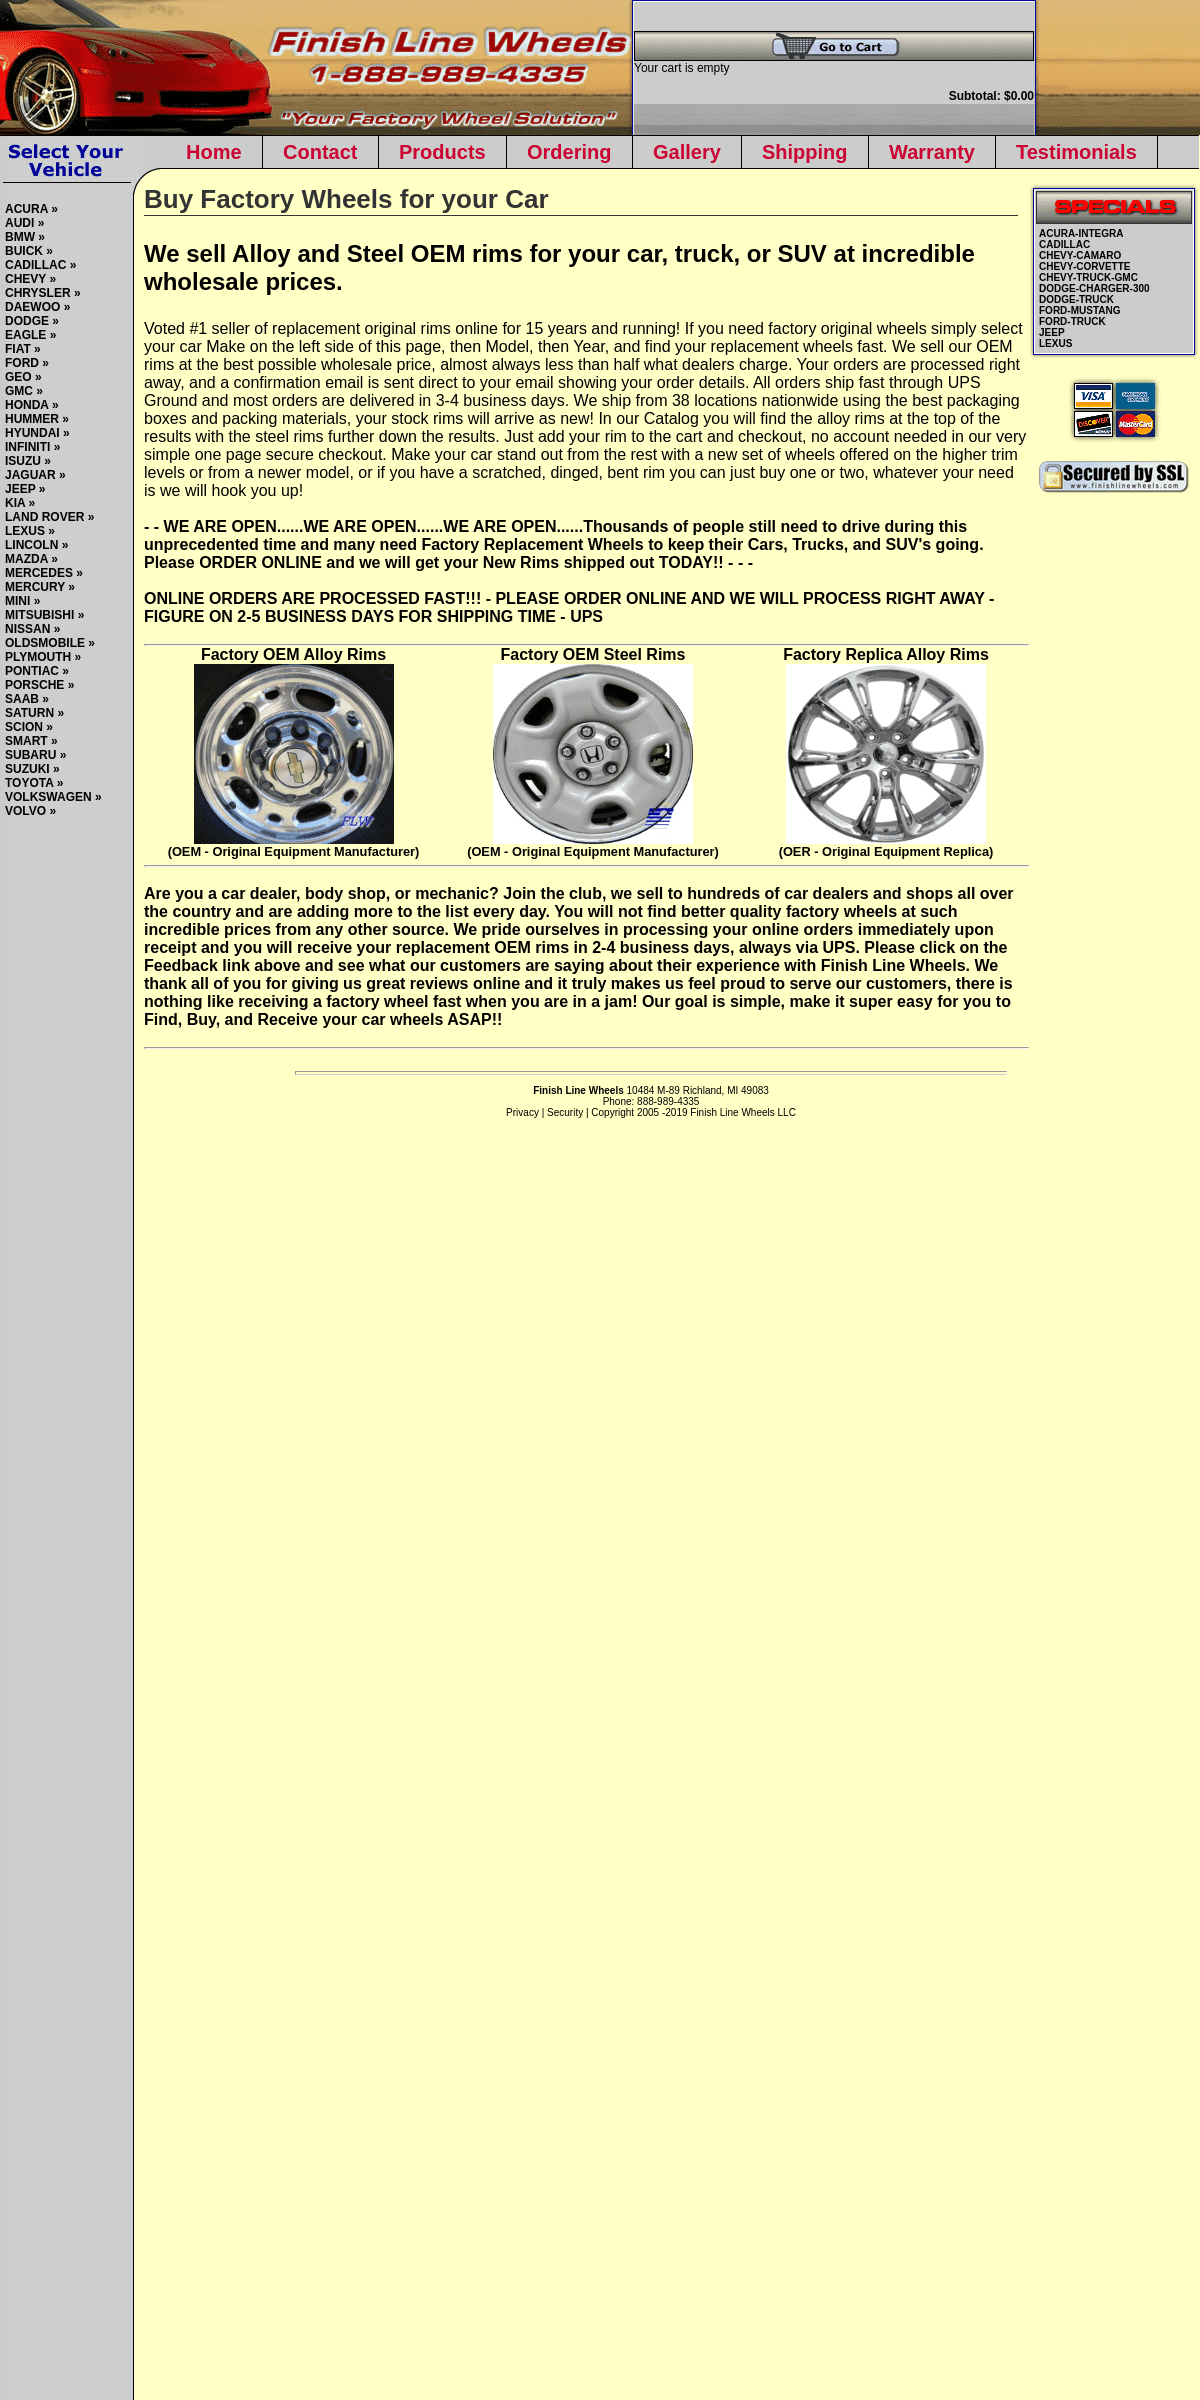 A complete backup of finishlinewheels.com